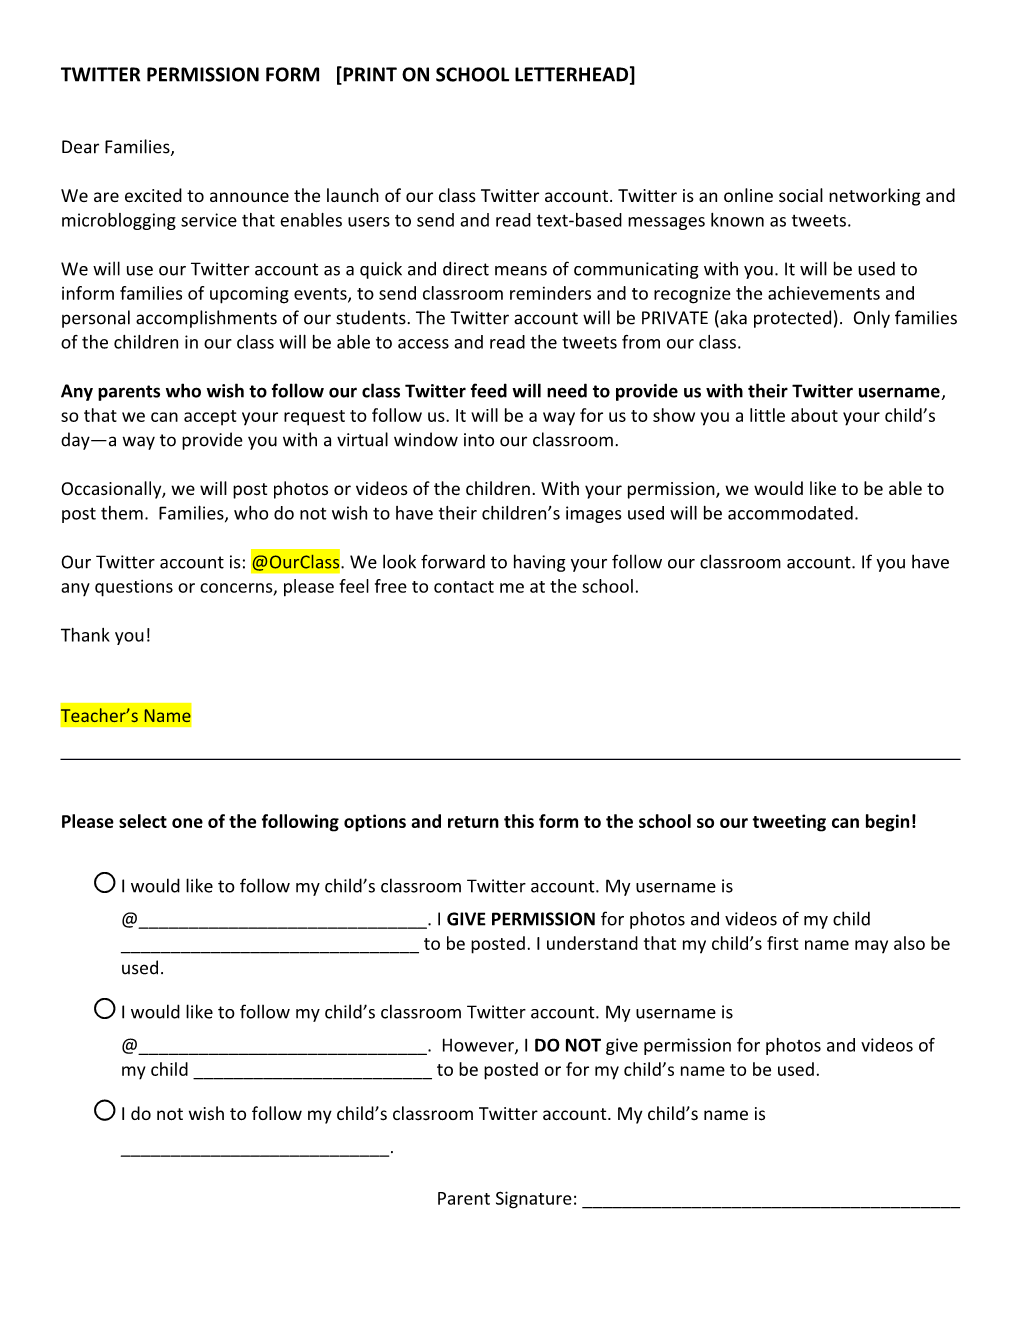 Twitter Permission Form Print on School Letterhead